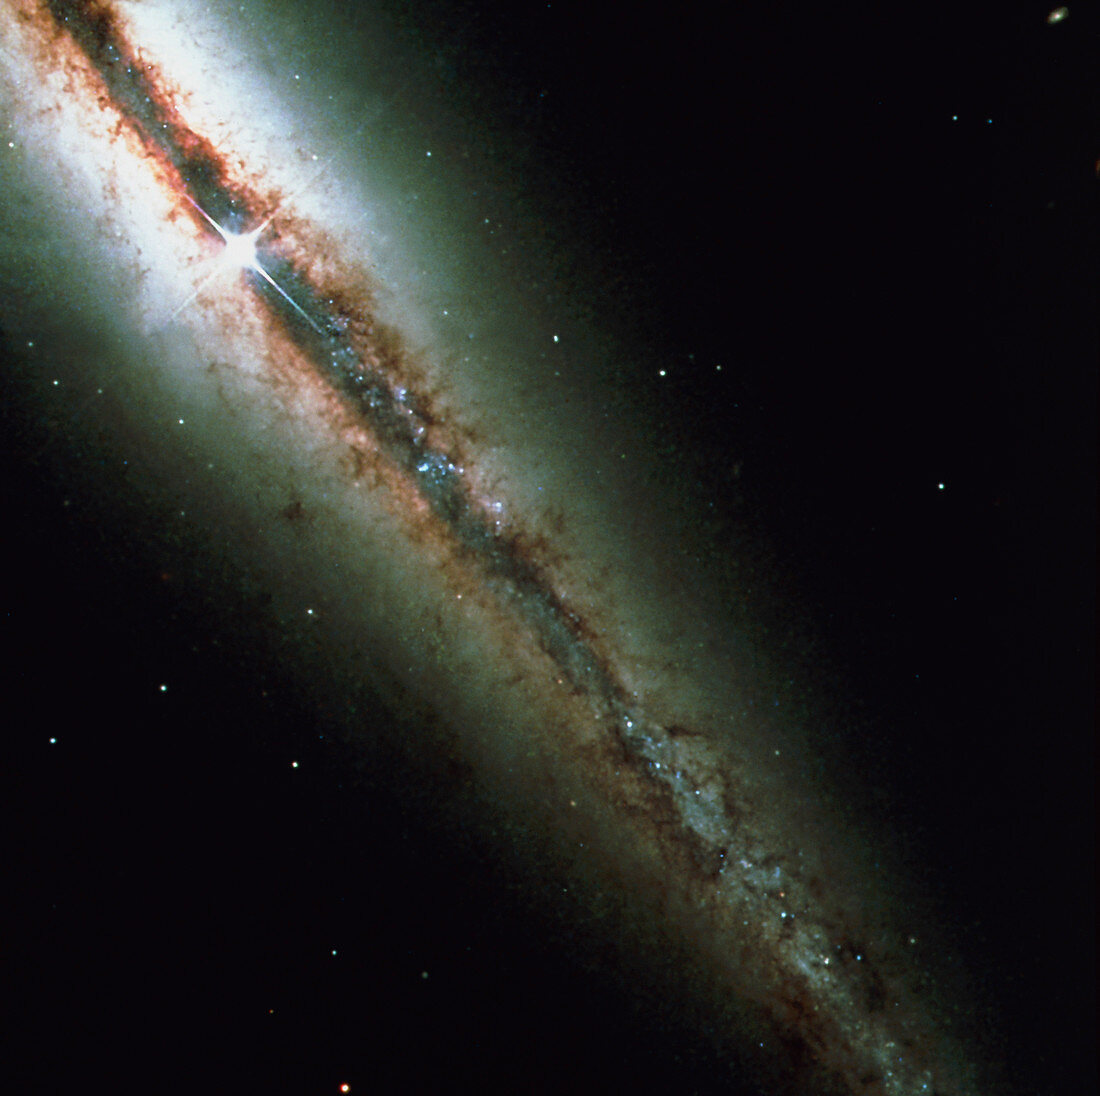 Spiral galaxy NGC 4013